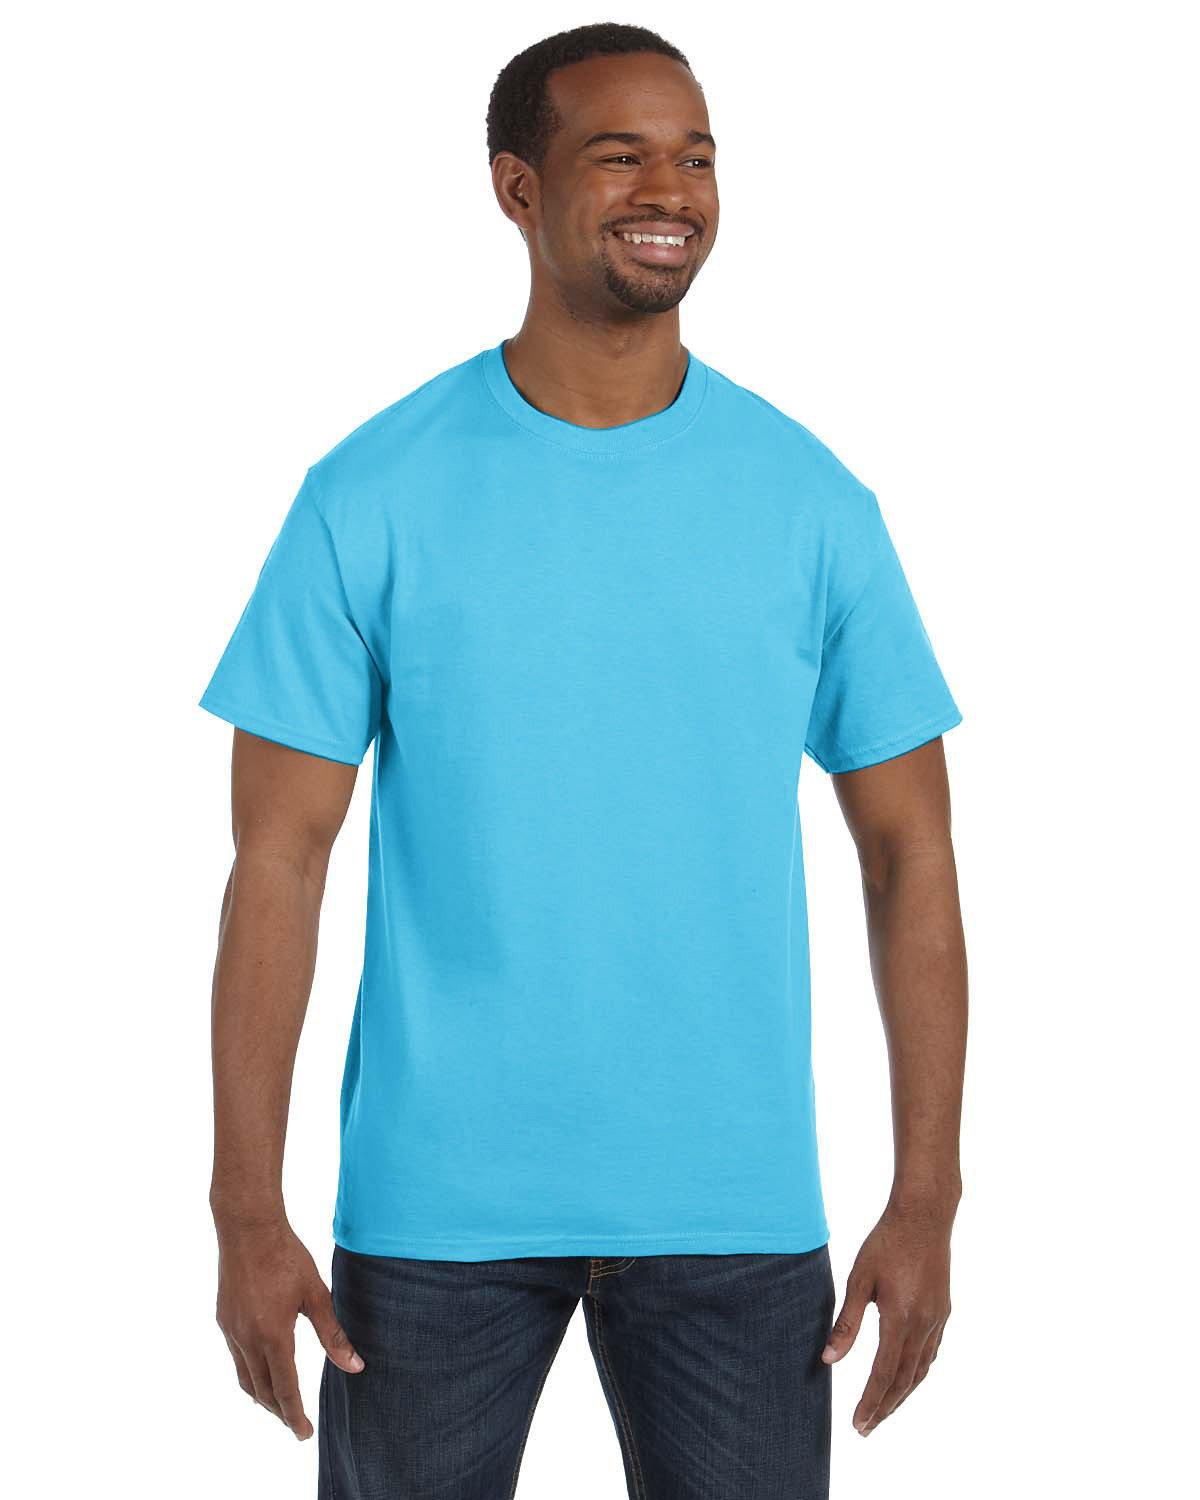 Hanes 5250 Authentic 100% Cotton T-Shirt - Fatigue Green